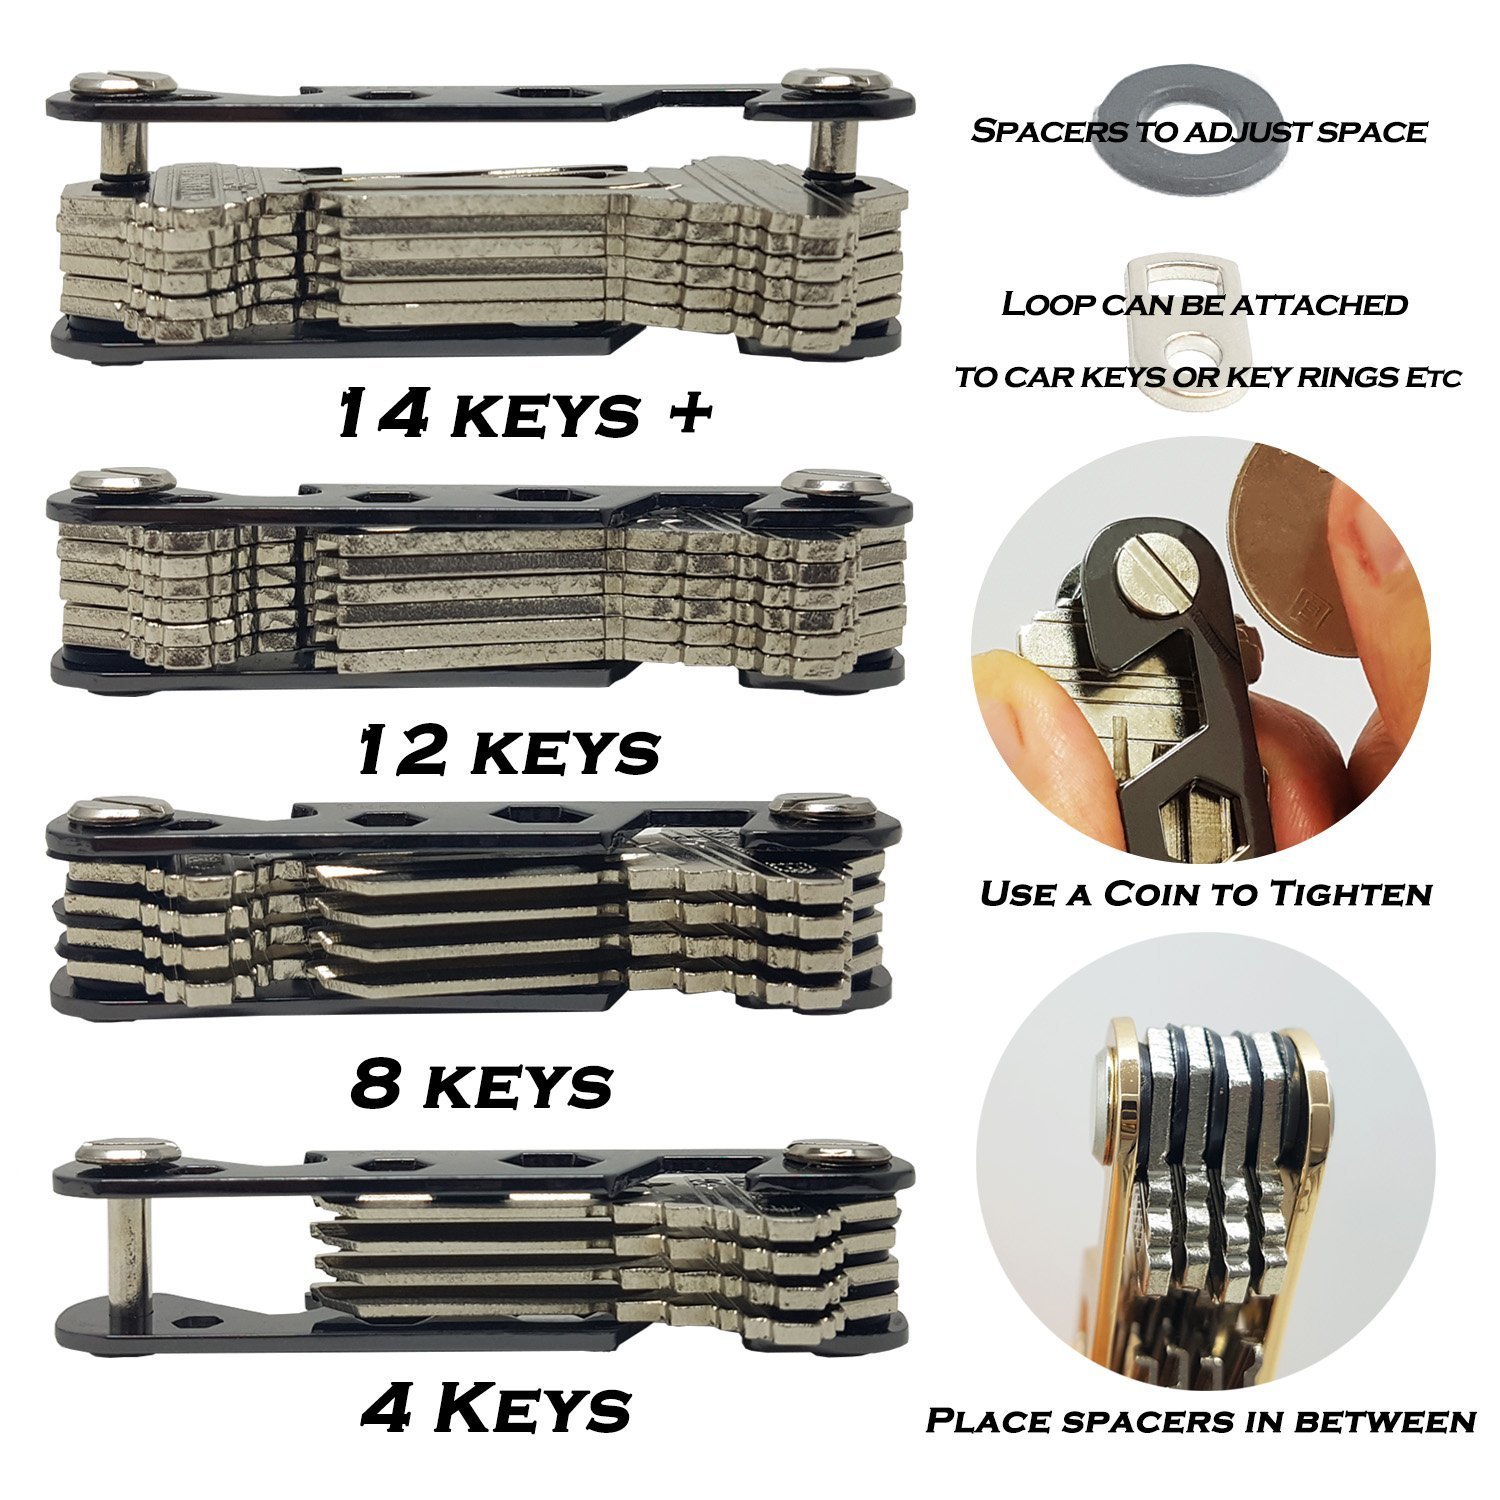 KEYTEC Compact Key Organizer (12-16 Keys) - Premium Key Holder with Built-in Tools - Bottle Opener/Phone Stand - Black Frame Plus Anti Loosening Washer - Great Gift (Black)